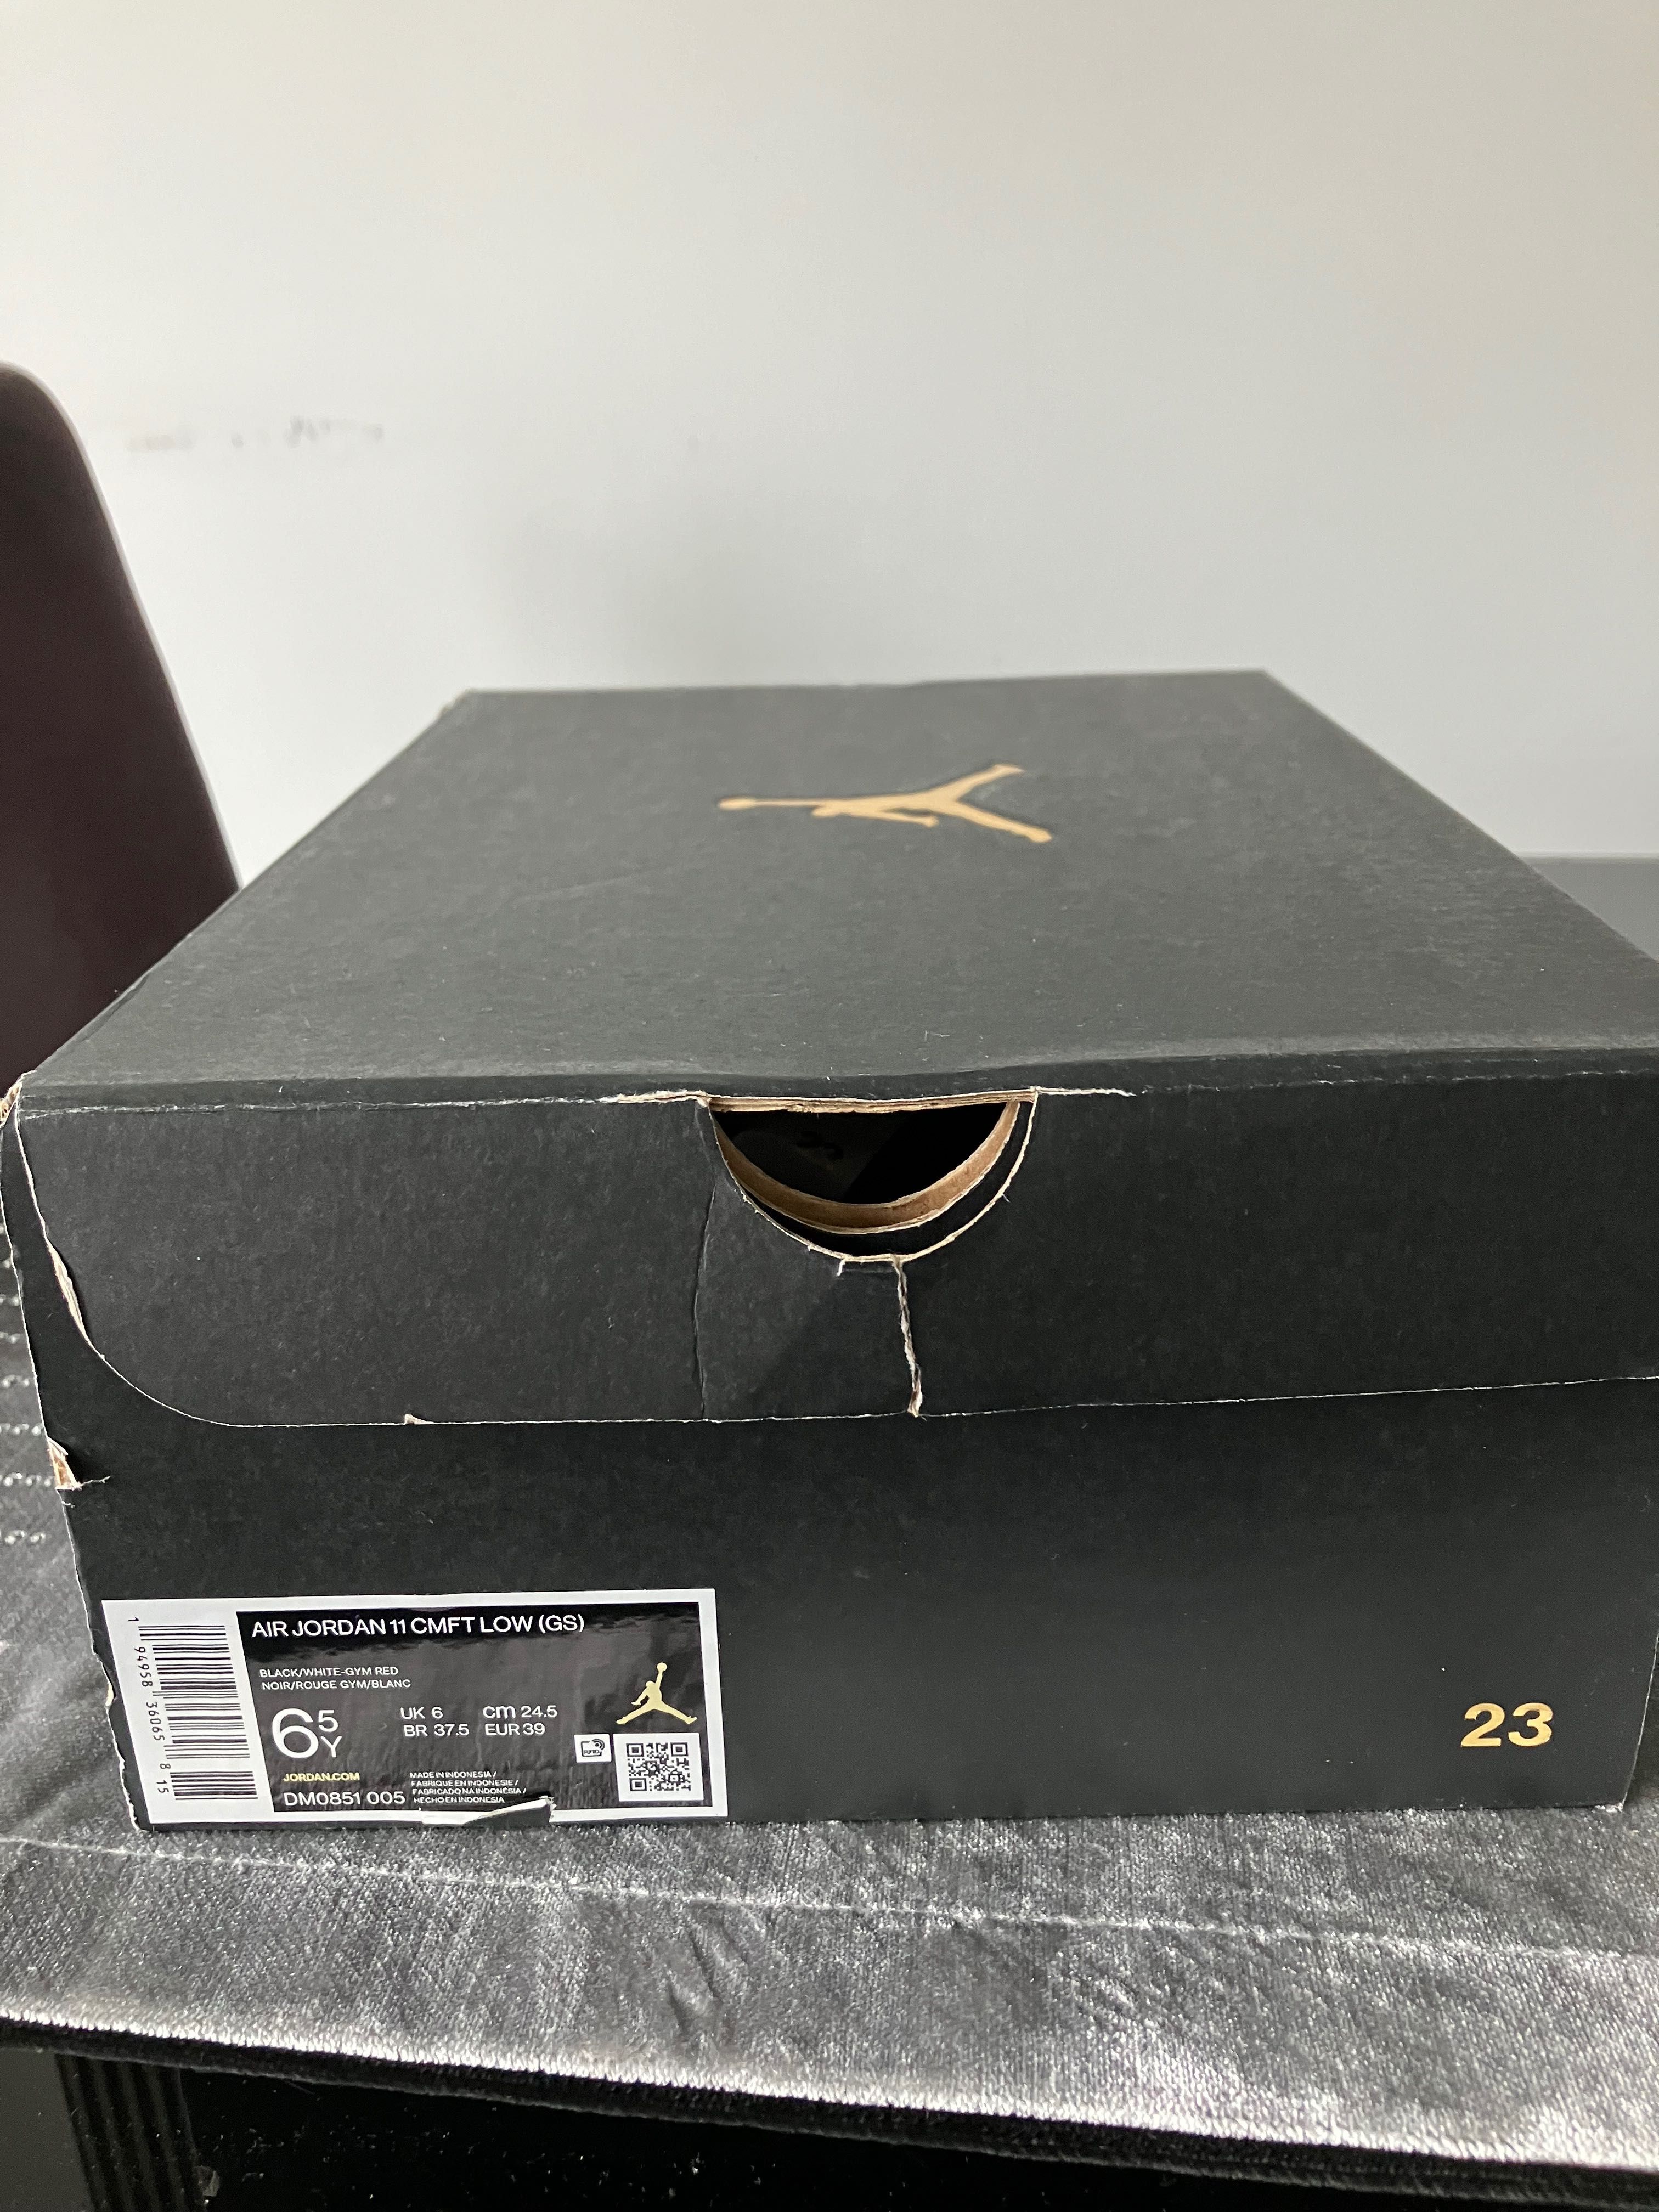 Nike Air Jordan 6 Rings “nowe” 38,5